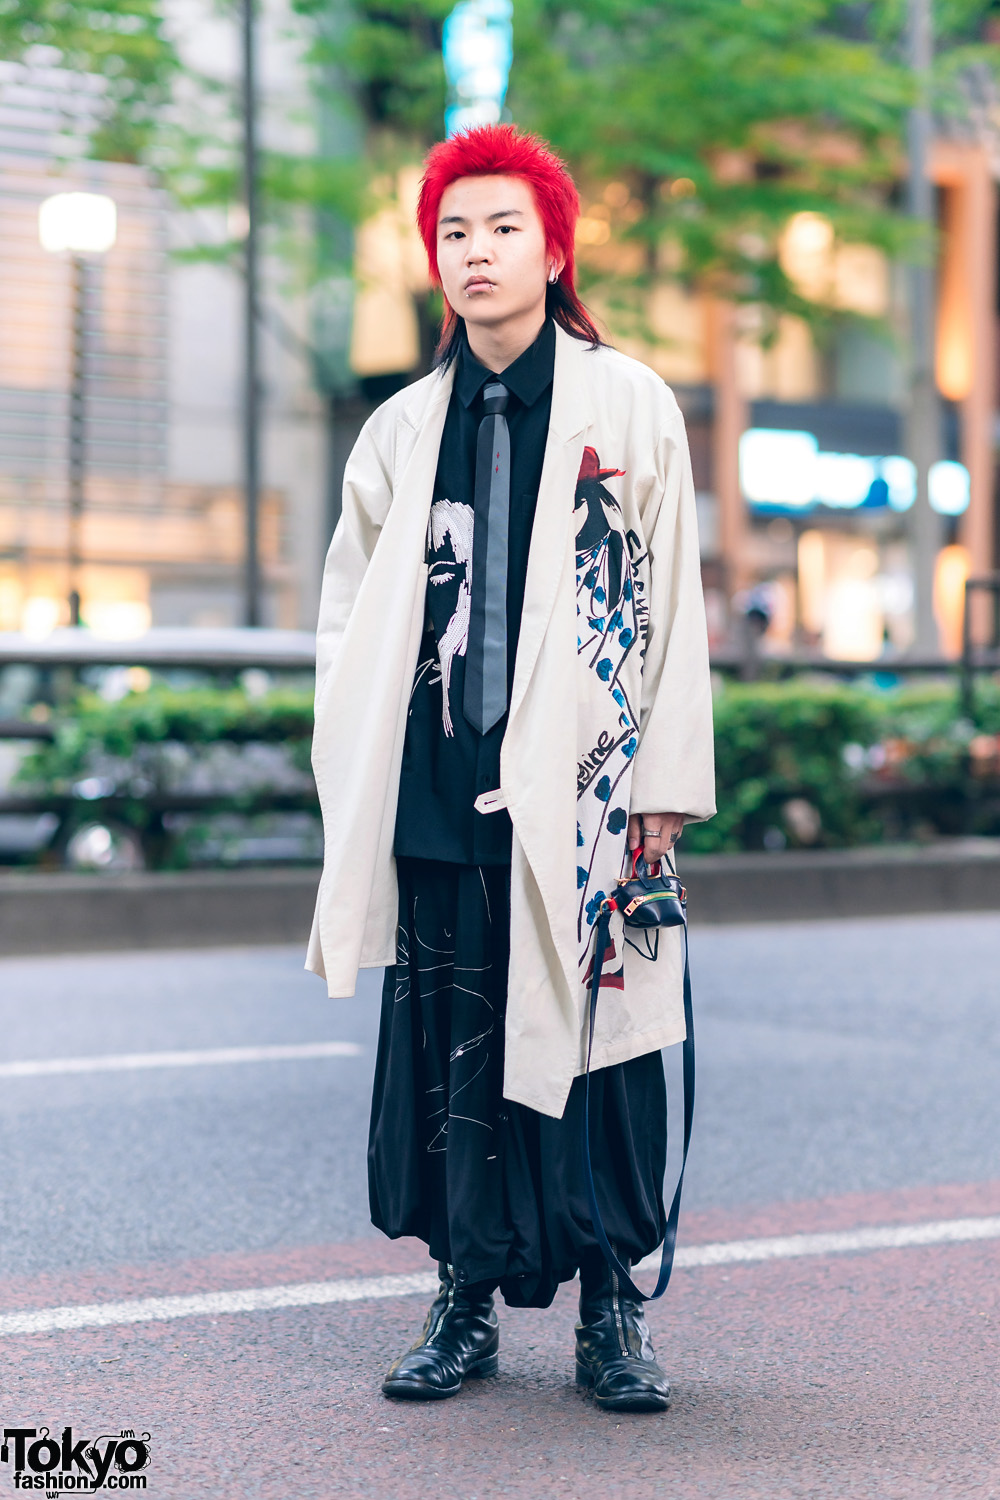 Yohji Yamamoto Tokyo Street Style w/ Red Mullet Hairstyle, Painted Coat, Sacai Bag & Guidi Zipper Boots